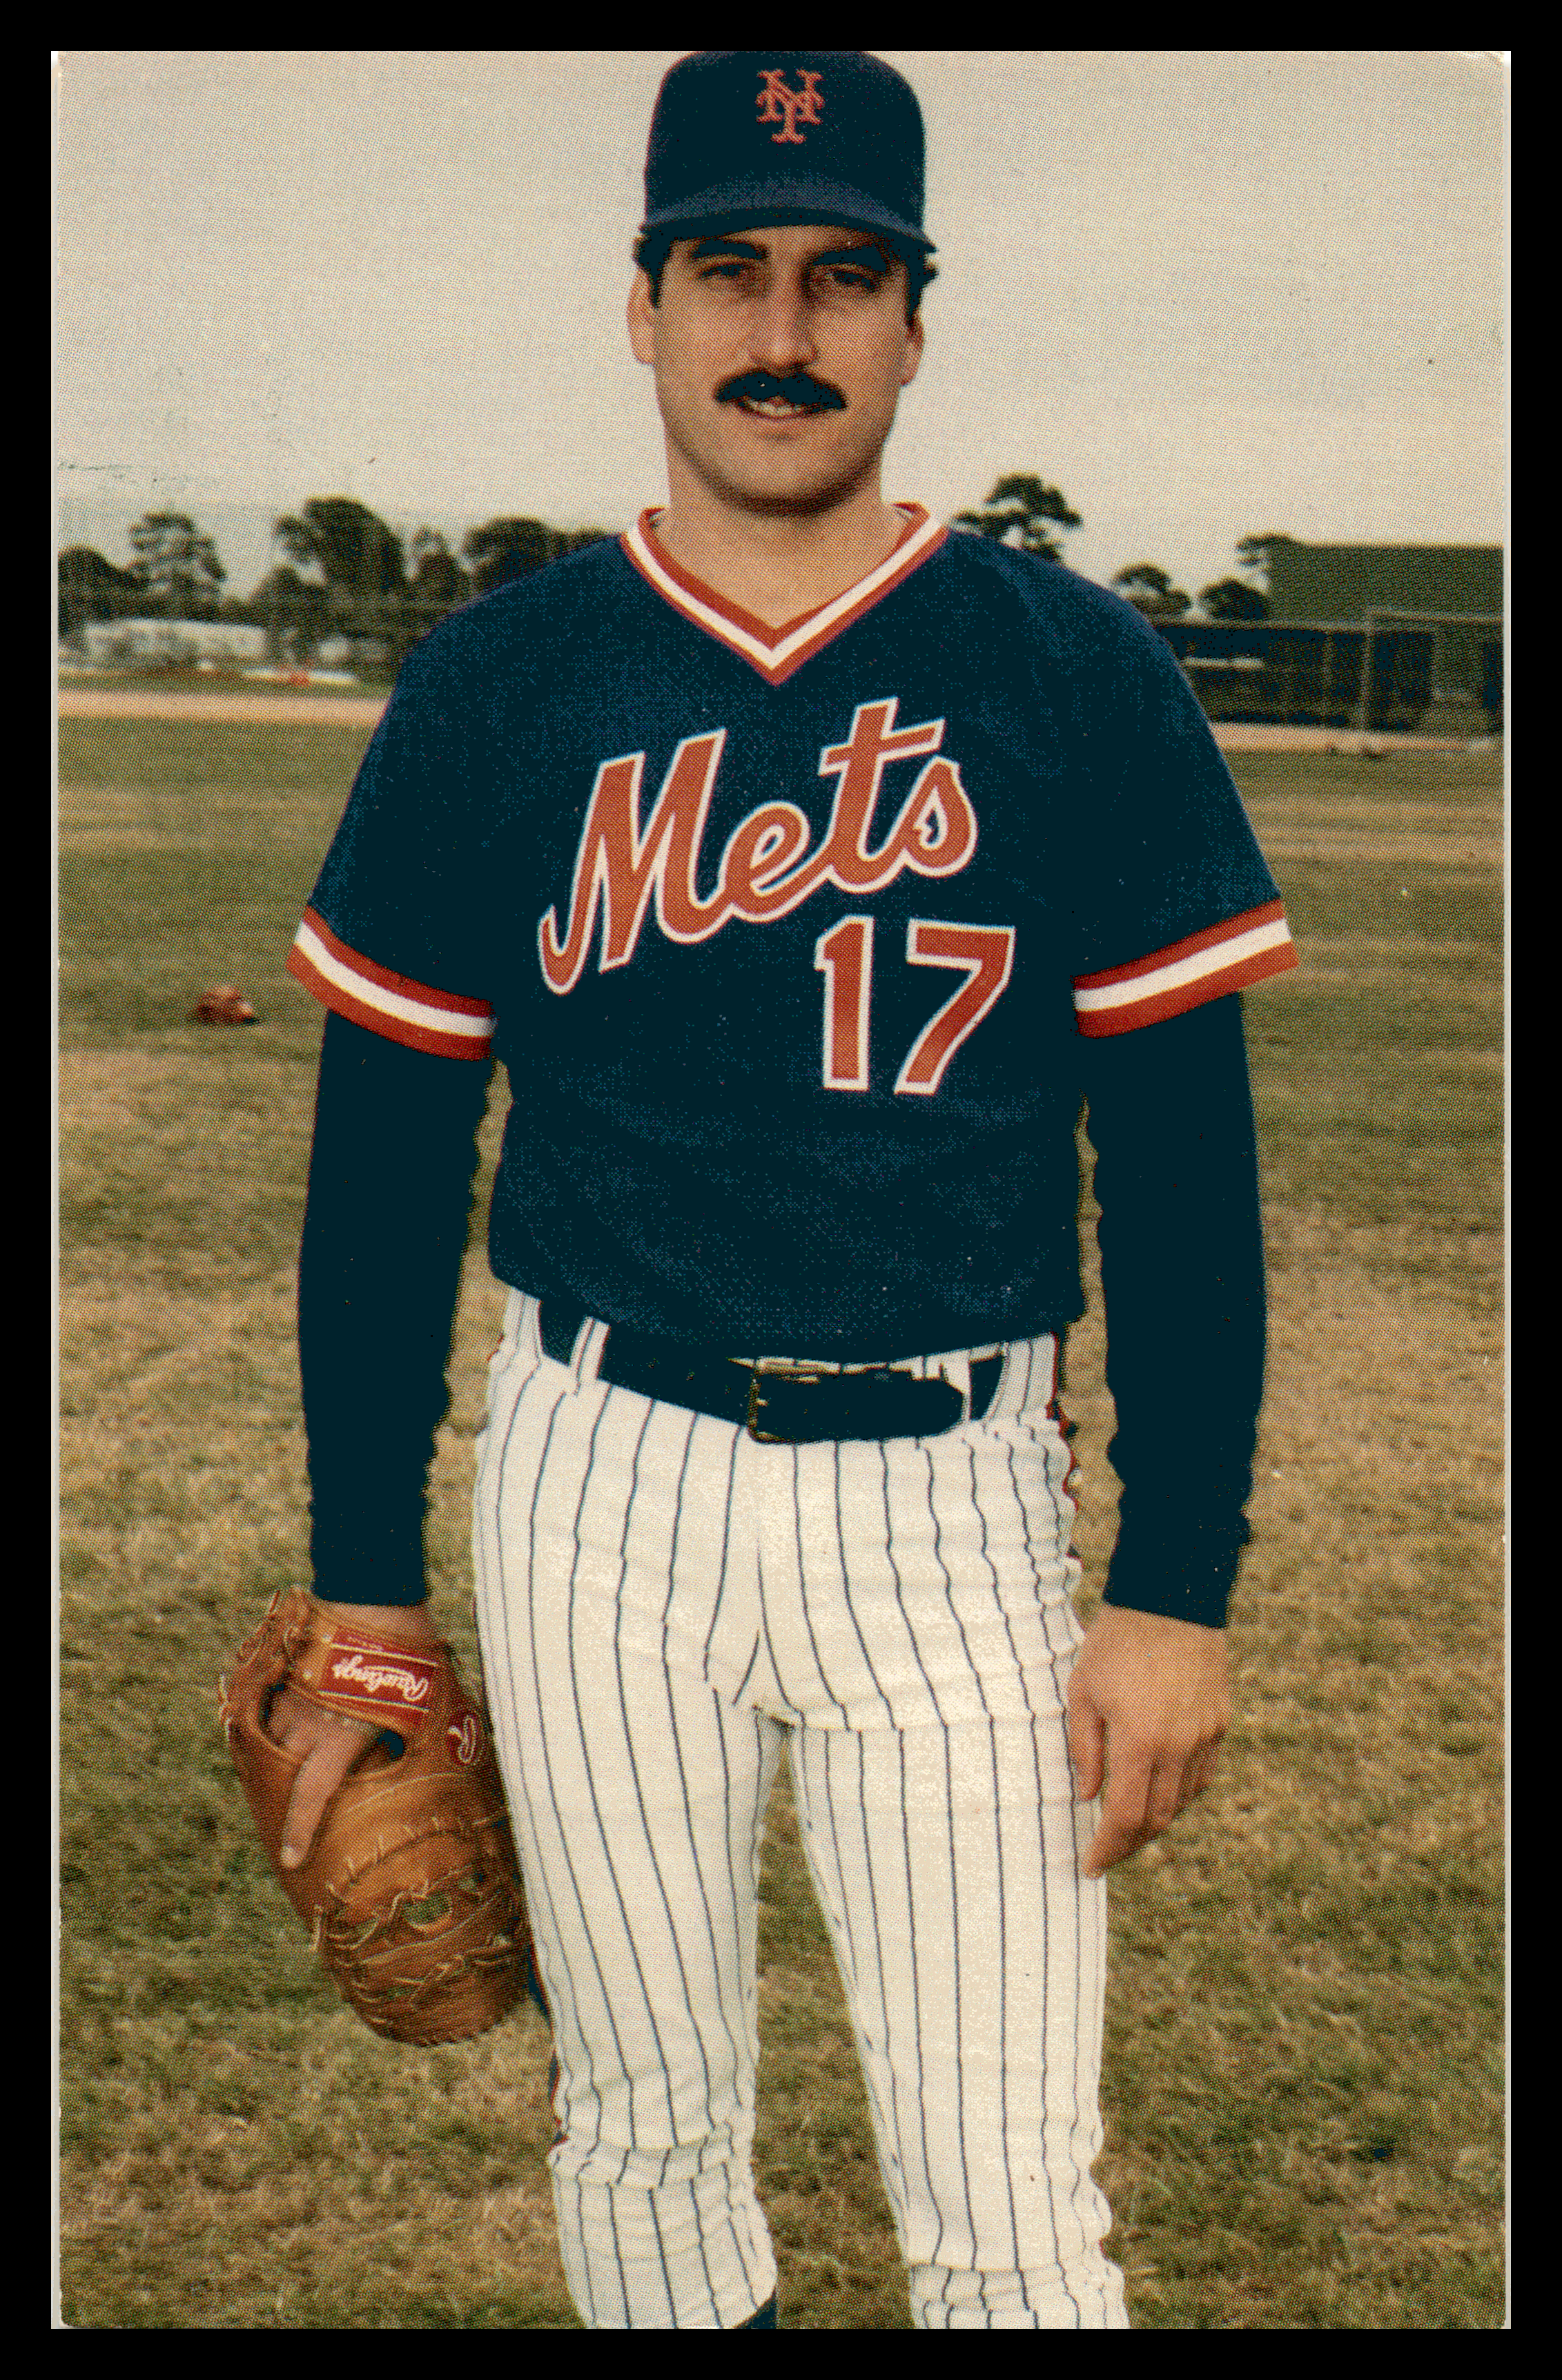 1986 TCMA New York Mets Postcards Keith Hernandez #NYM86-18 VG-EX 